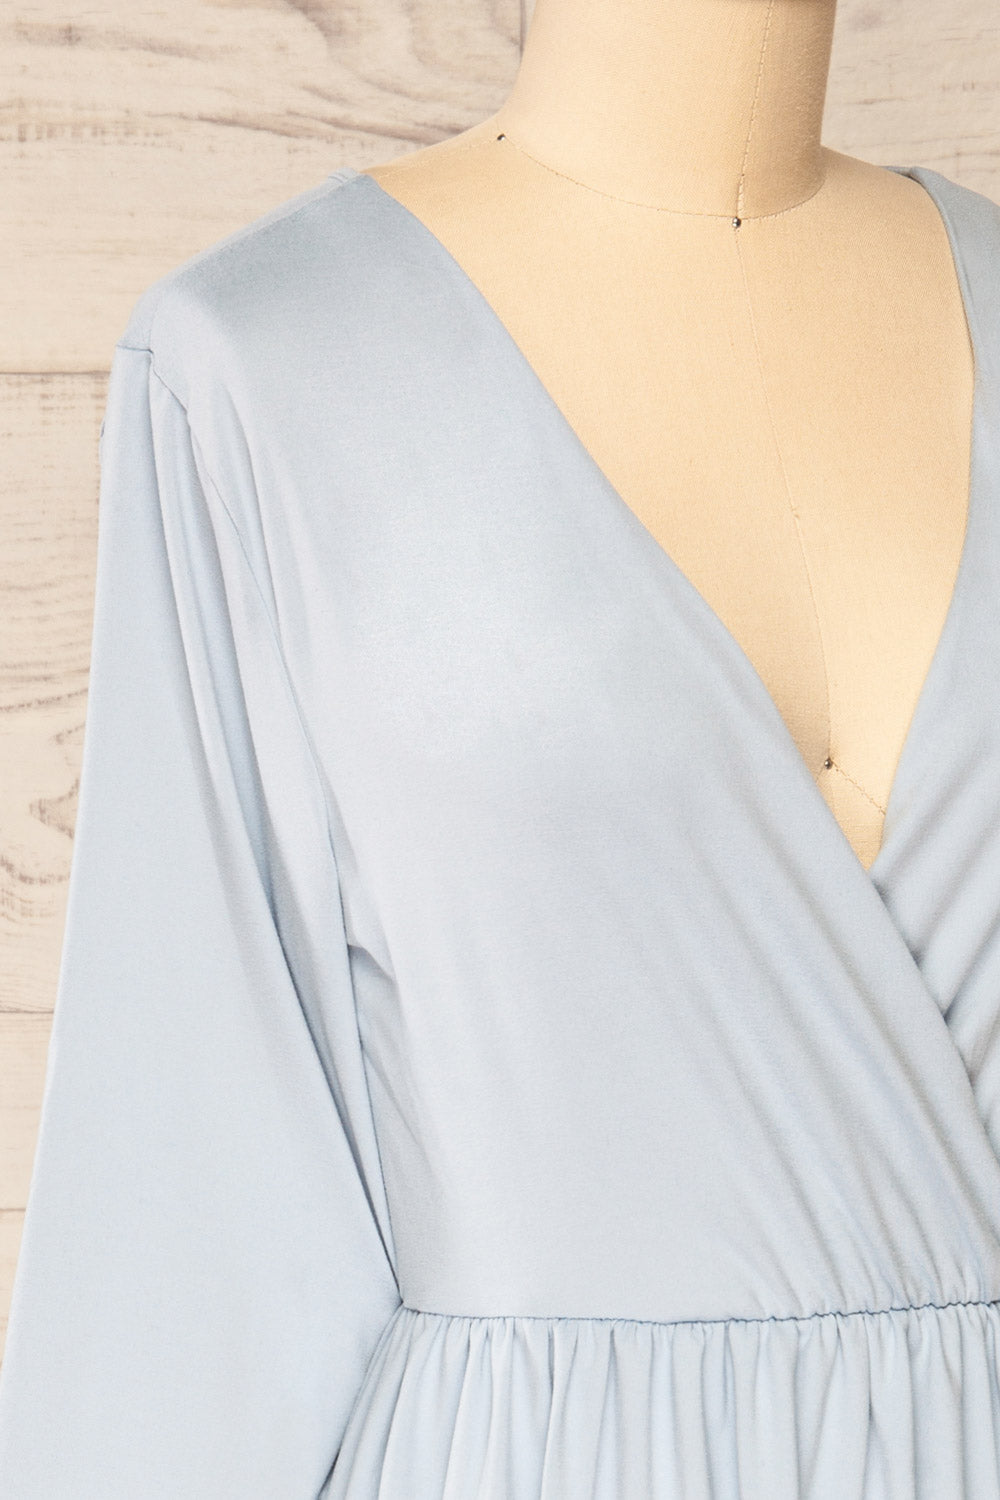 Hemili Light Blue Wrap Neckline Short Dress | La petite garçonne side close-up